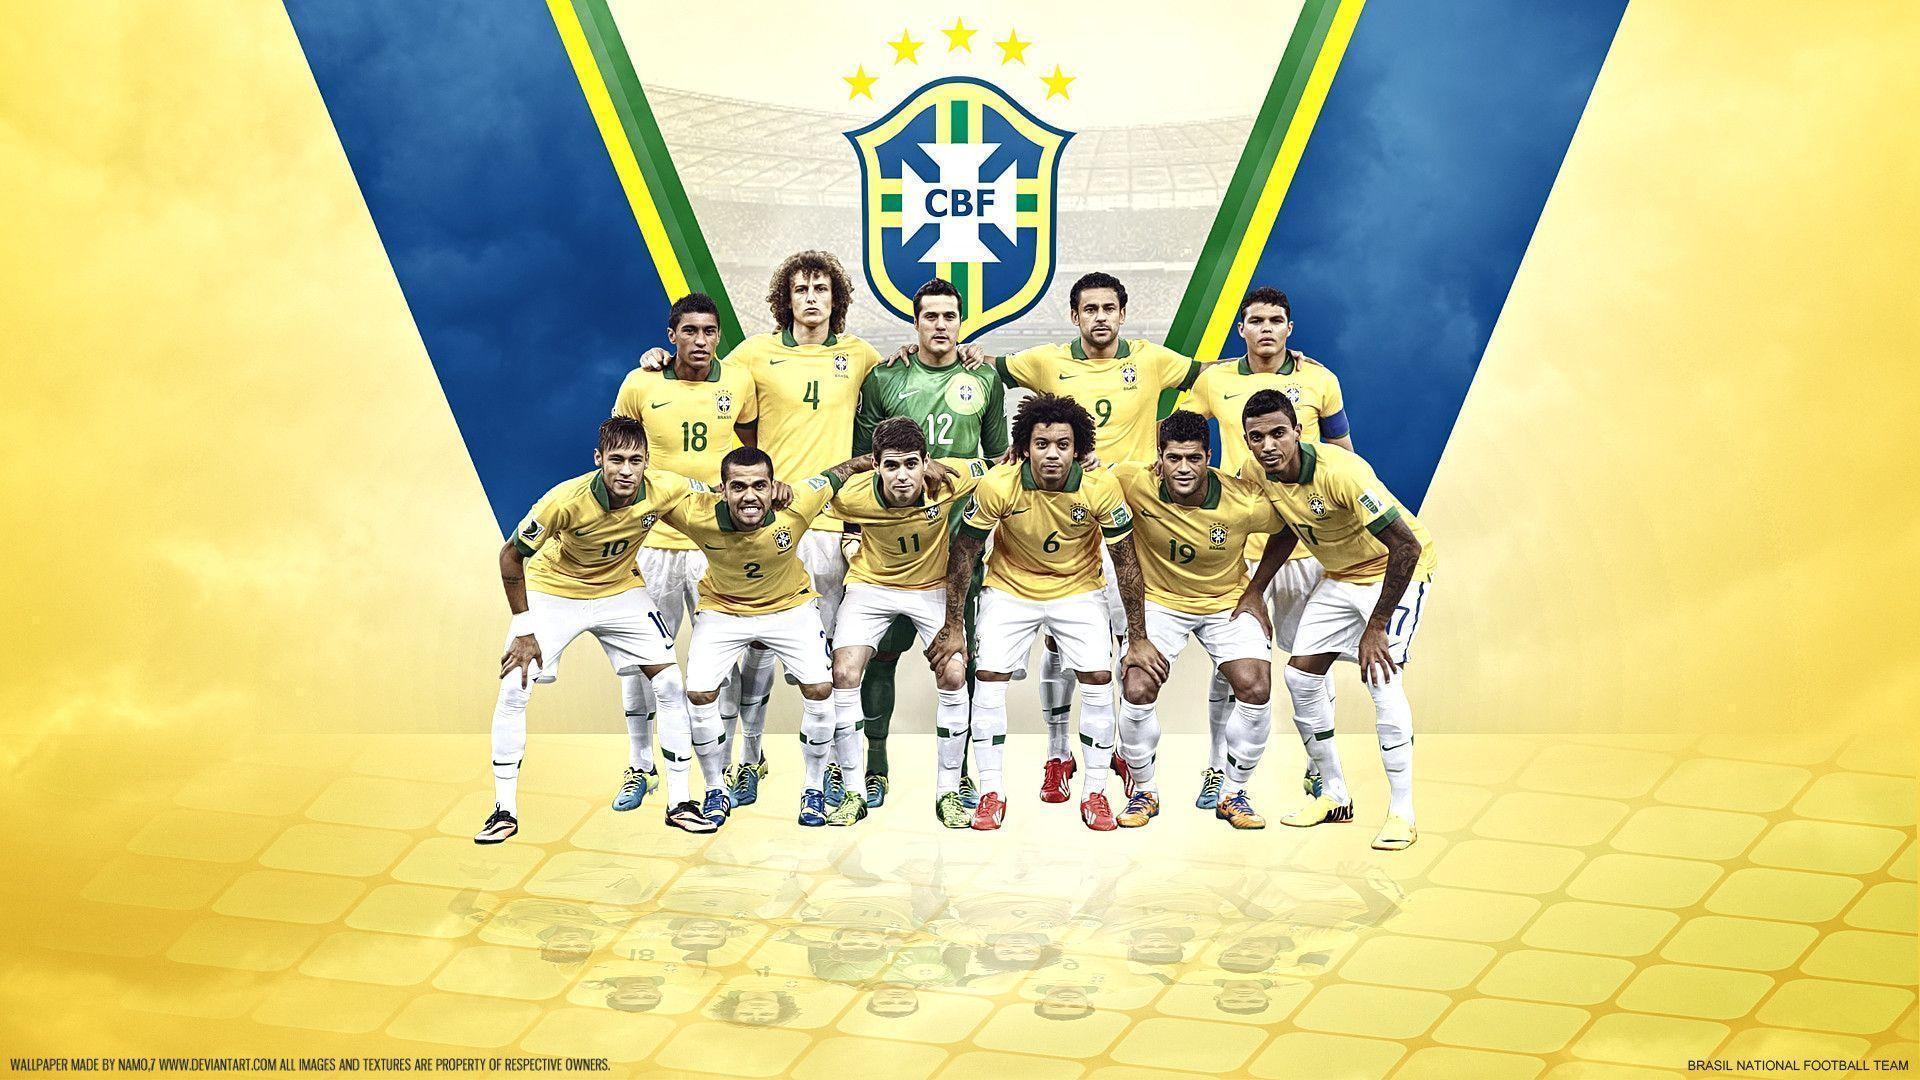 Brazil Football Wallpapers - Wallpaper Cave